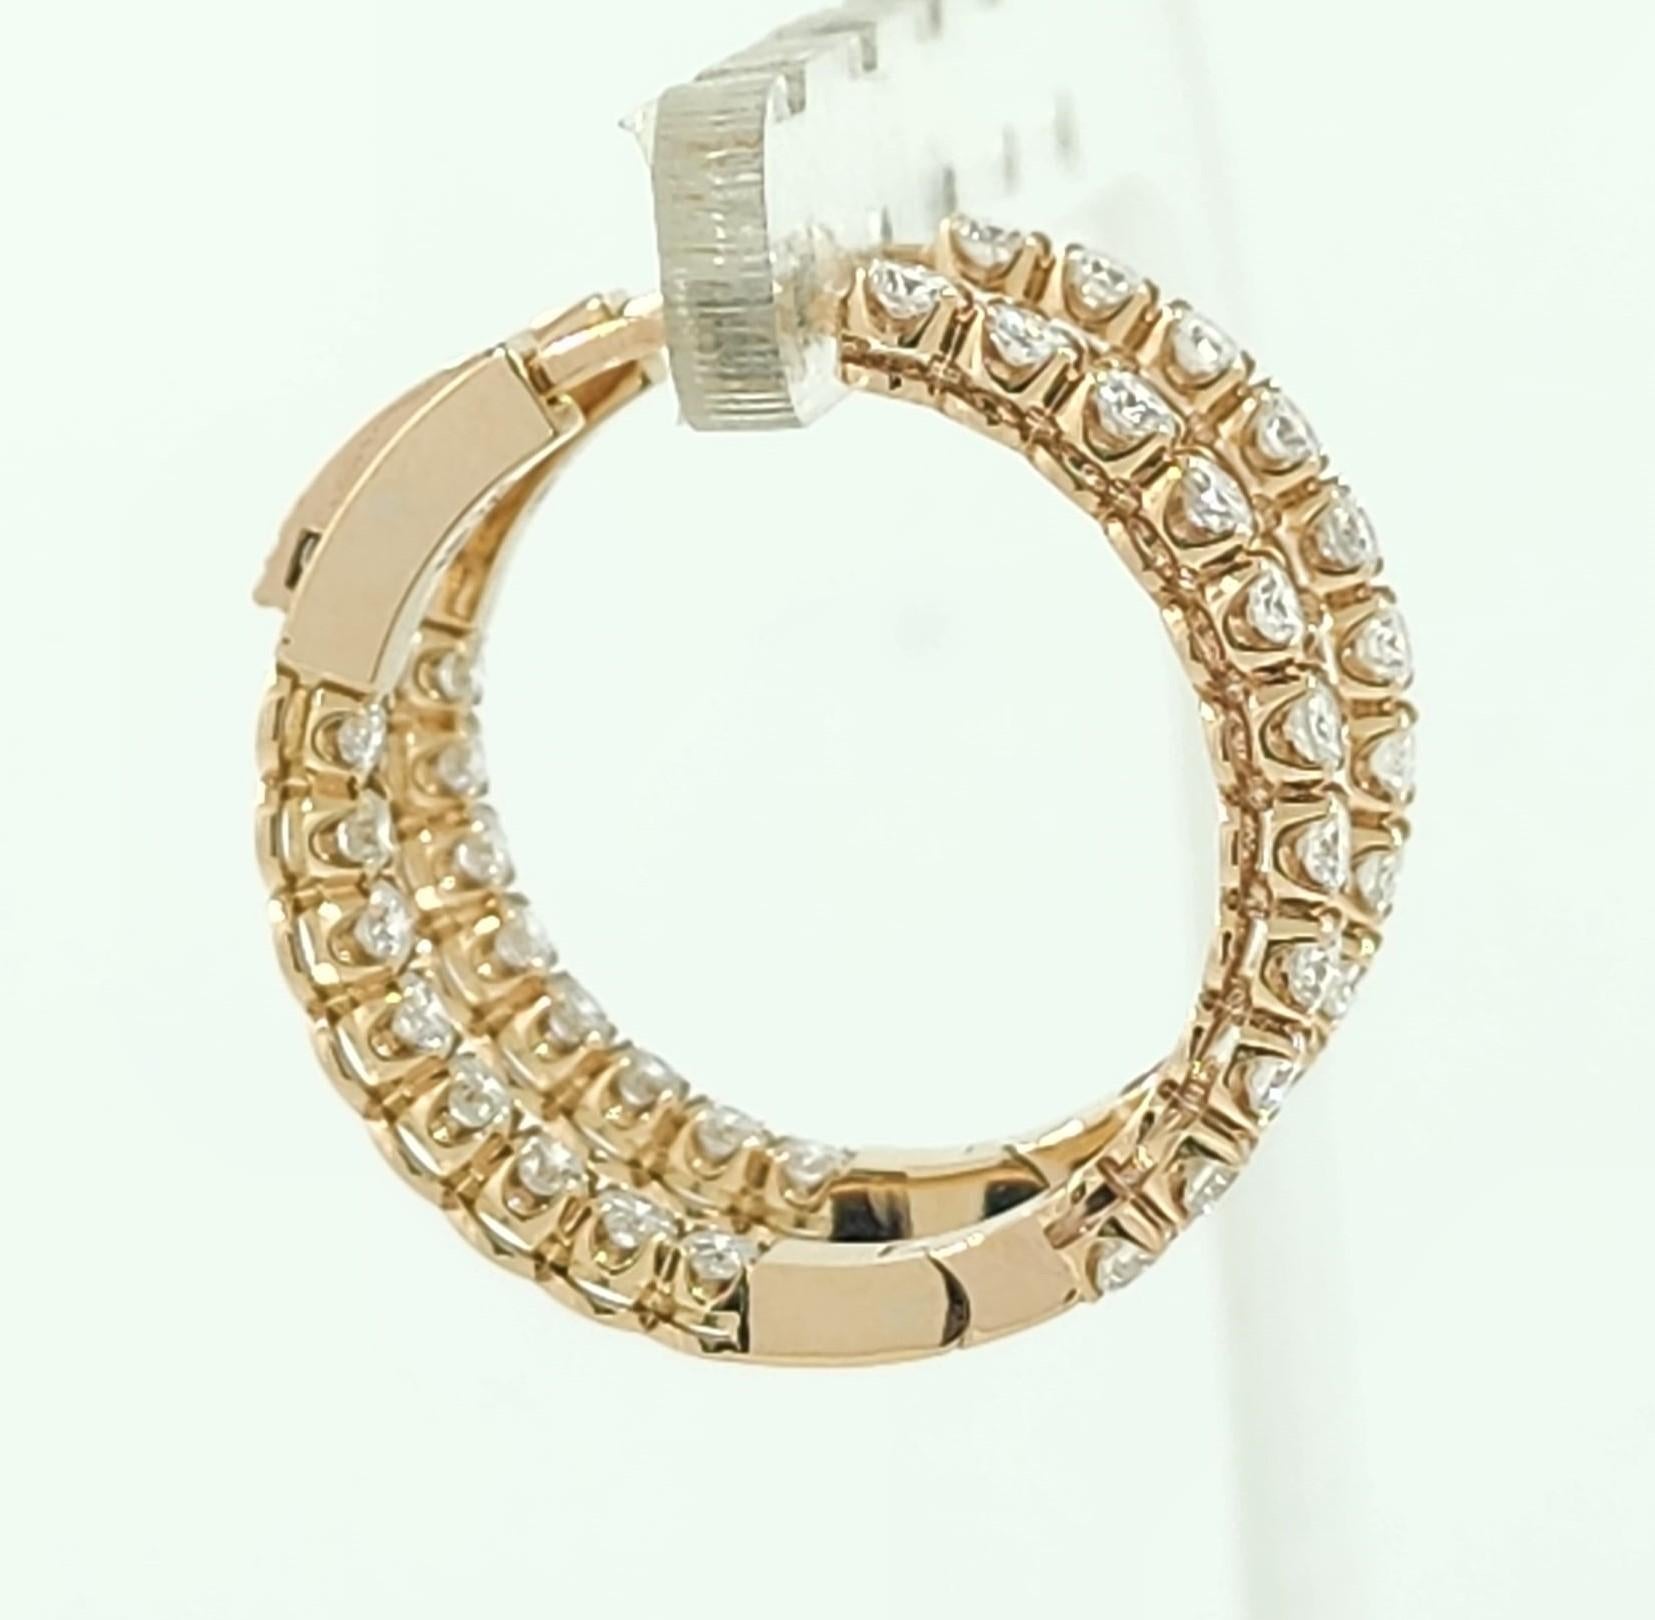 1.51Carat Diamond Hoop Earrings in 18 Karat Rose Gold For Sale 2